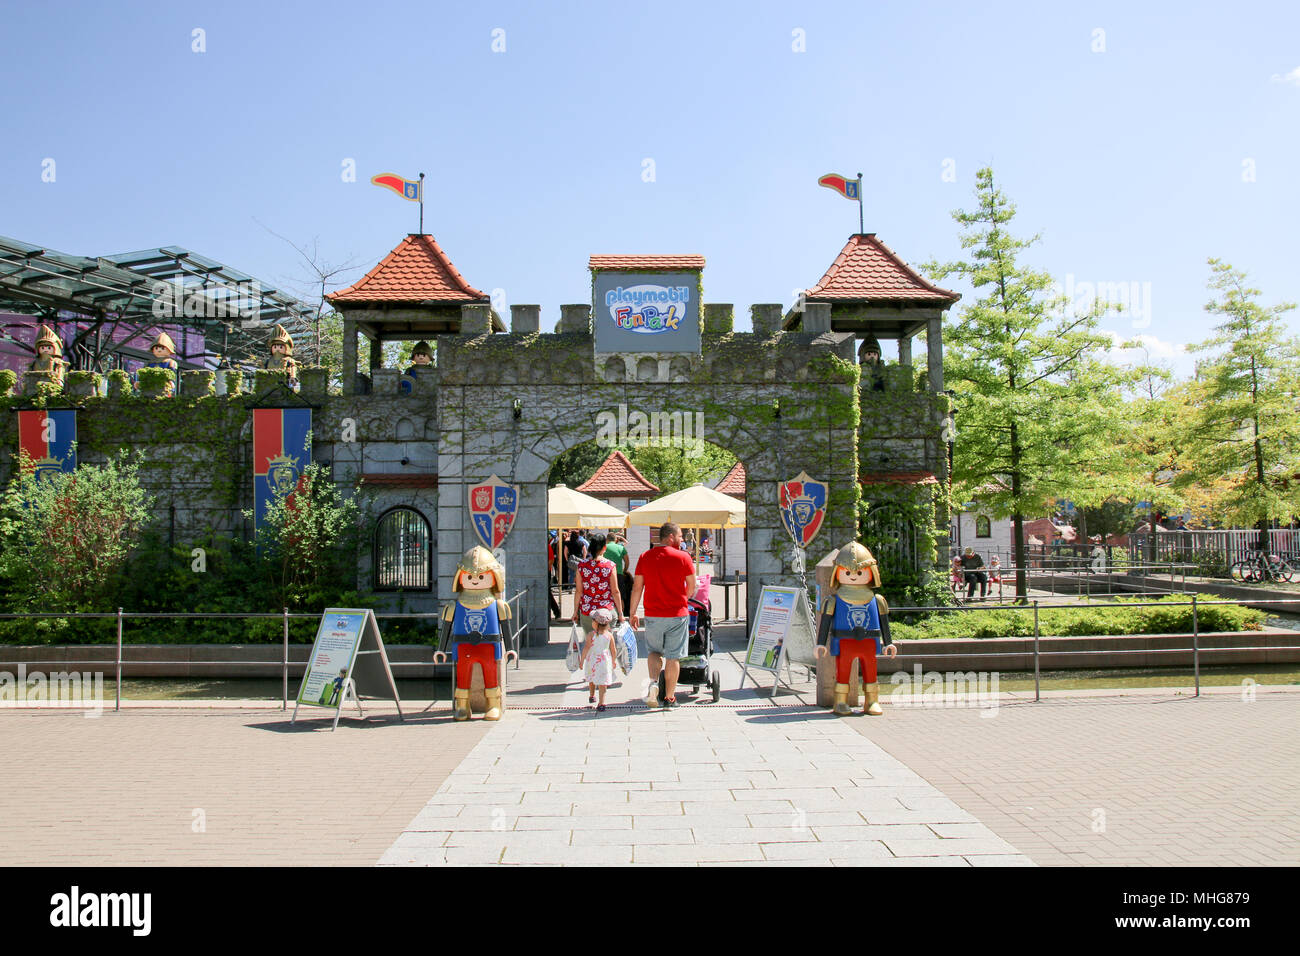 Zirndorf, Germany - April 29, 2018: View of the entrance of the Playmobil  Funpark Zirndorf near Nuremberg, Germany Stock Photo - Alamy